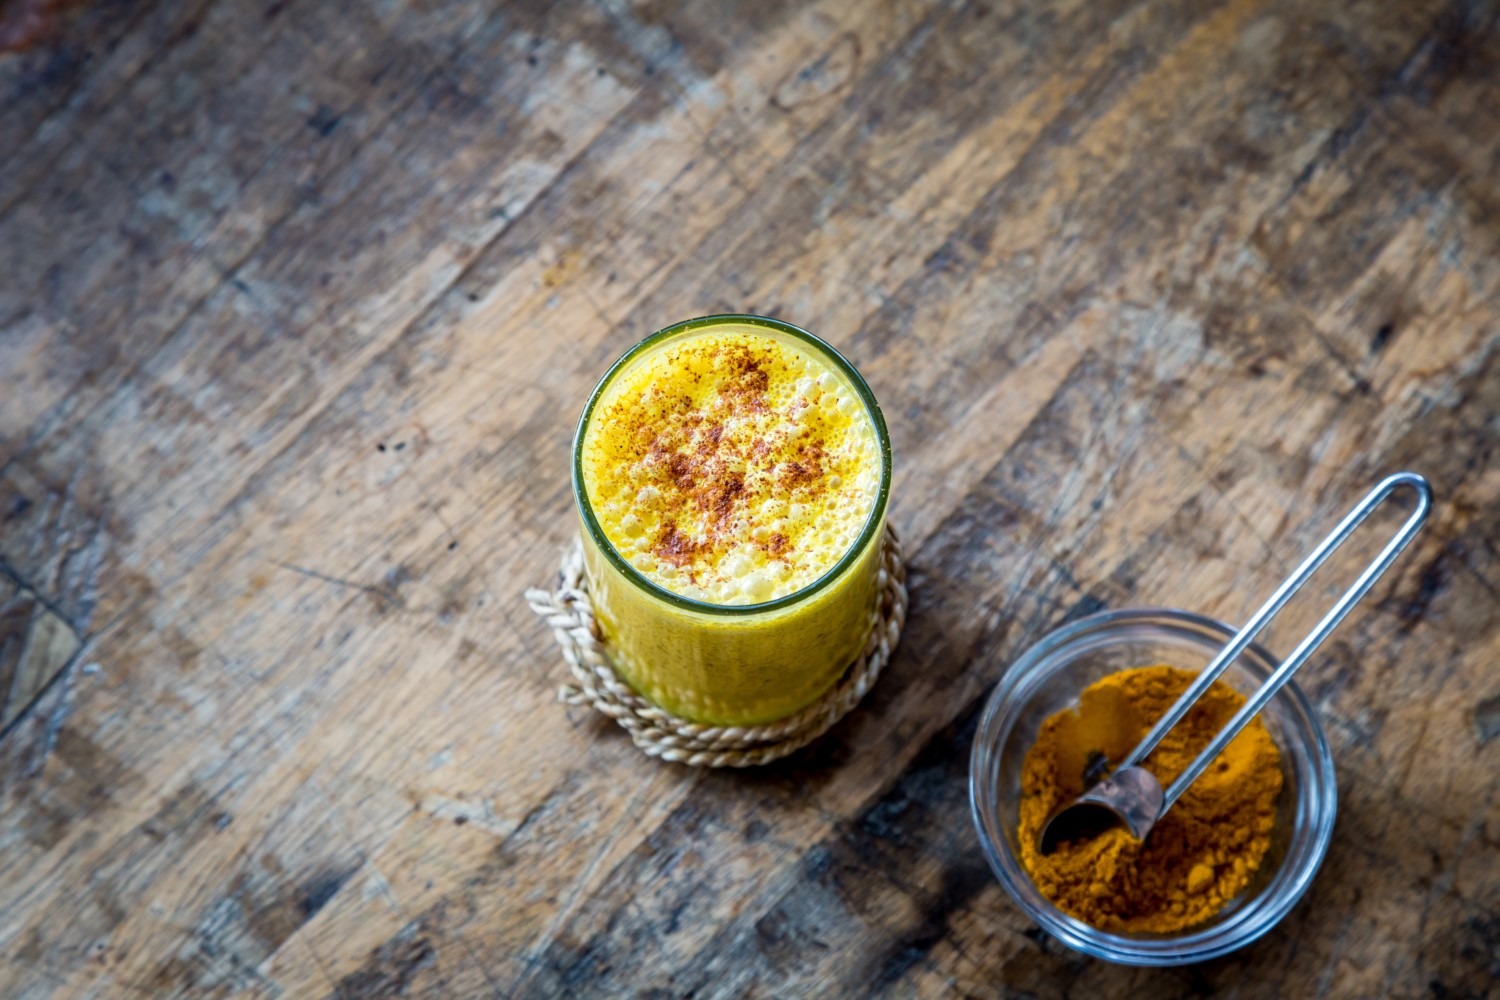 Golden milk - turmeric infused drink